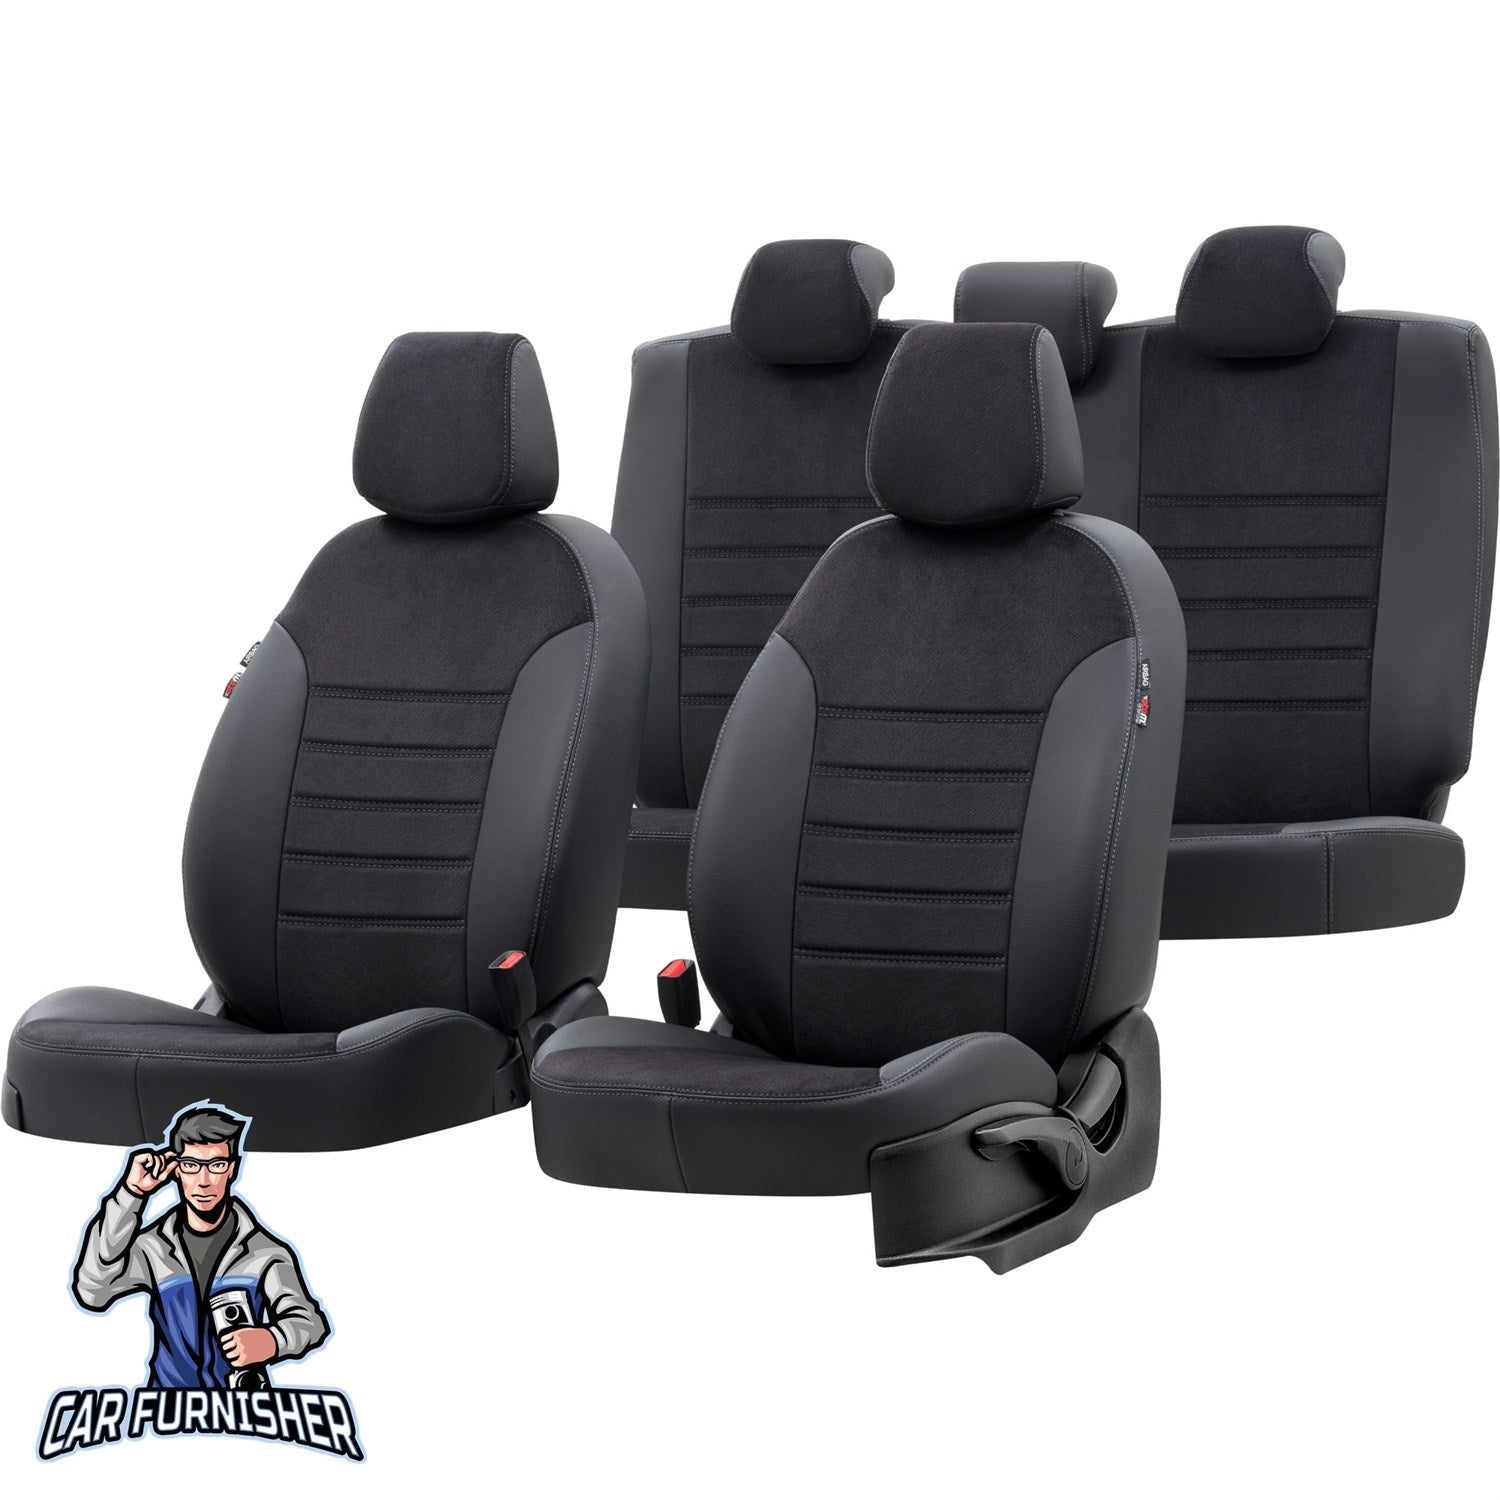 Chevrolet Tahoe Car Seat Covers 2007-2014 GMT/LS/LTZ London Black Full Set (5 Seats + Handrest) Leather & Fabric